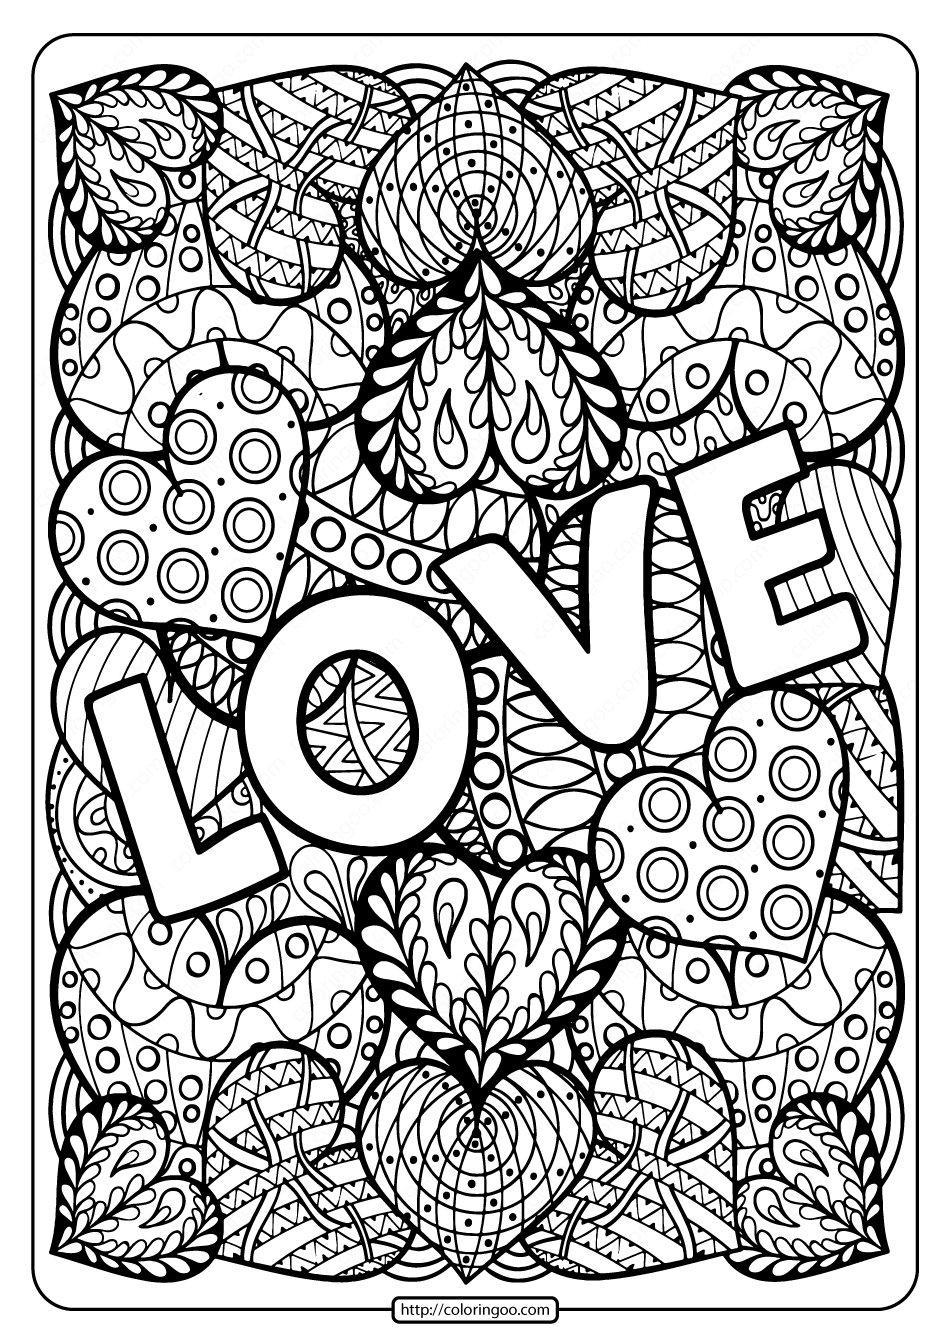 Free Printable Love Pdf Coloring Page | Love coloring pages, Coloring pages,  Heart coloring pages